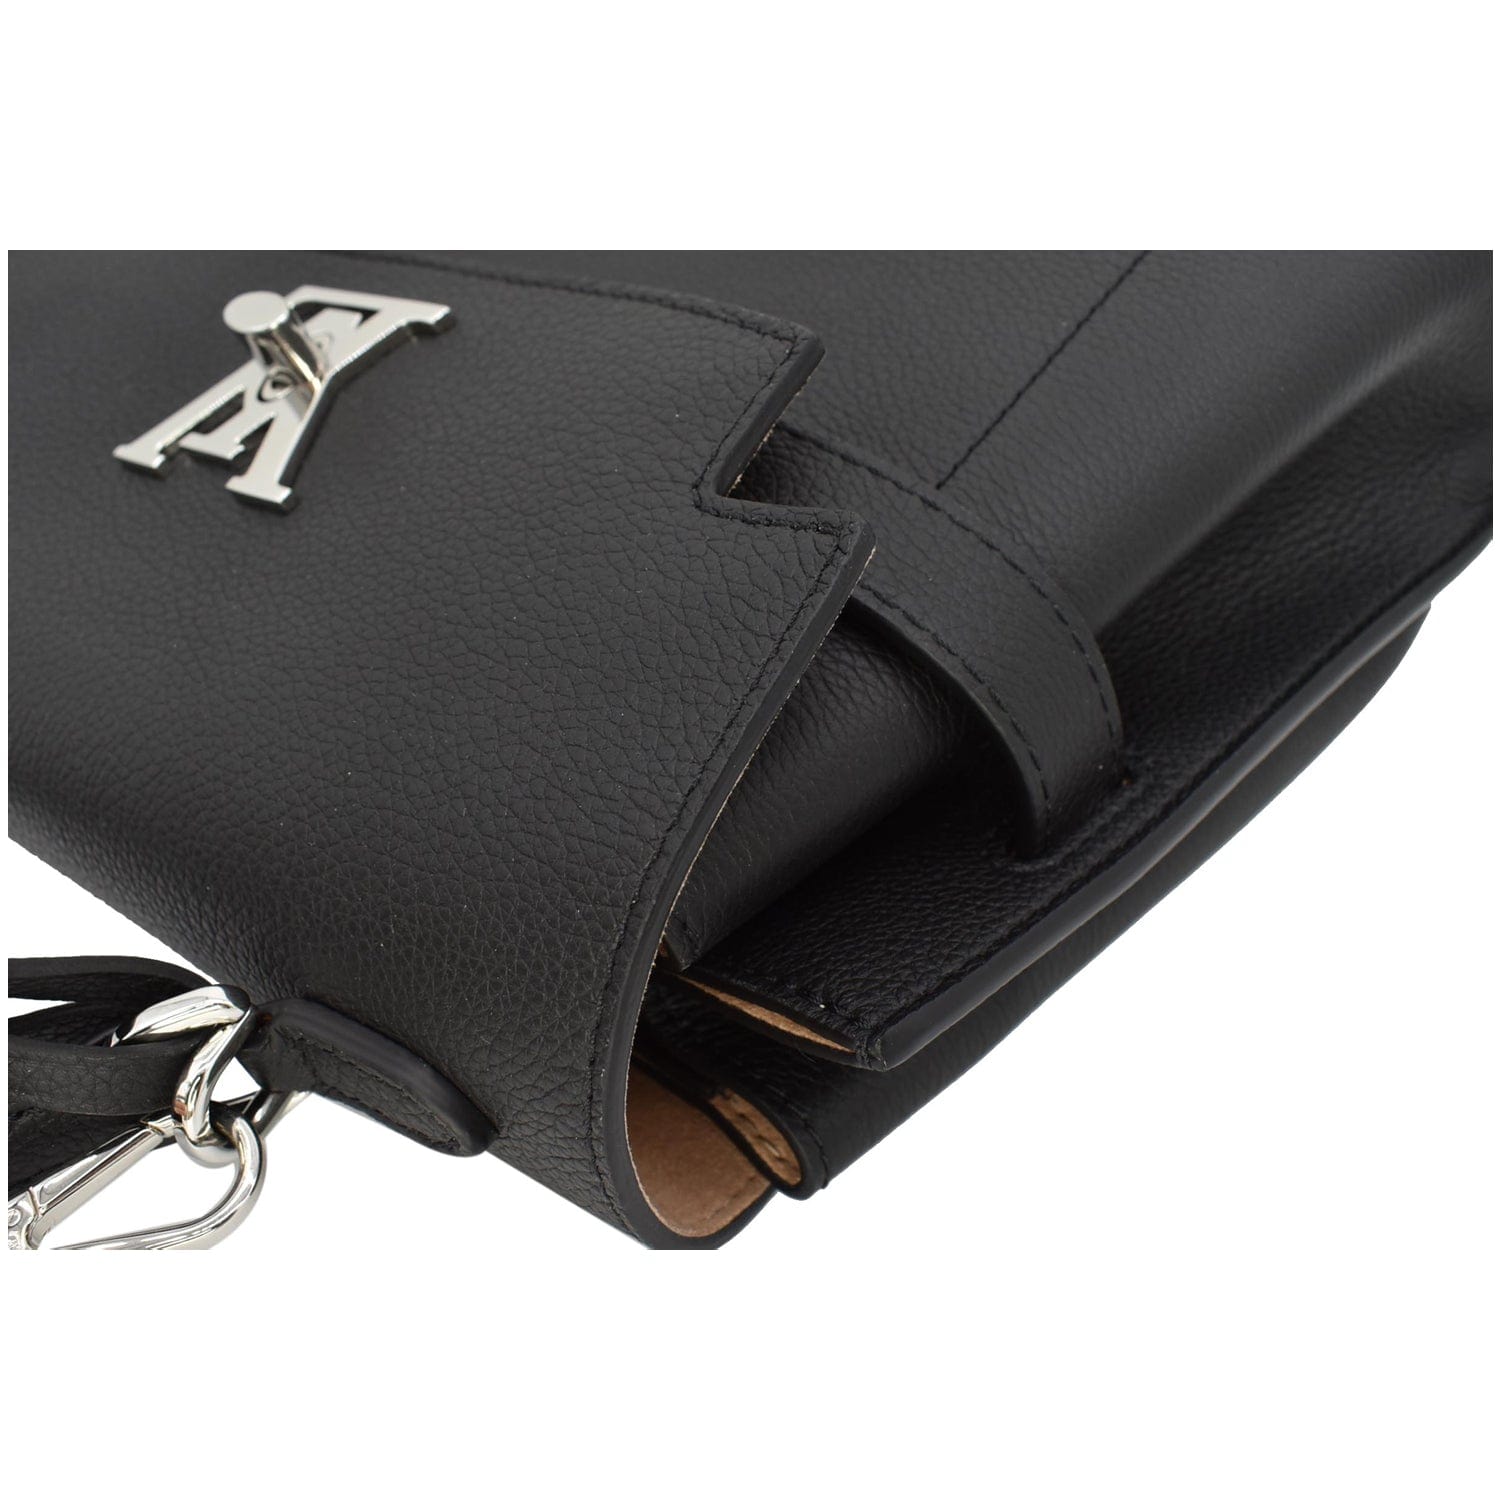 Lockme Ever BB Lockme Leather - Women - Handbags